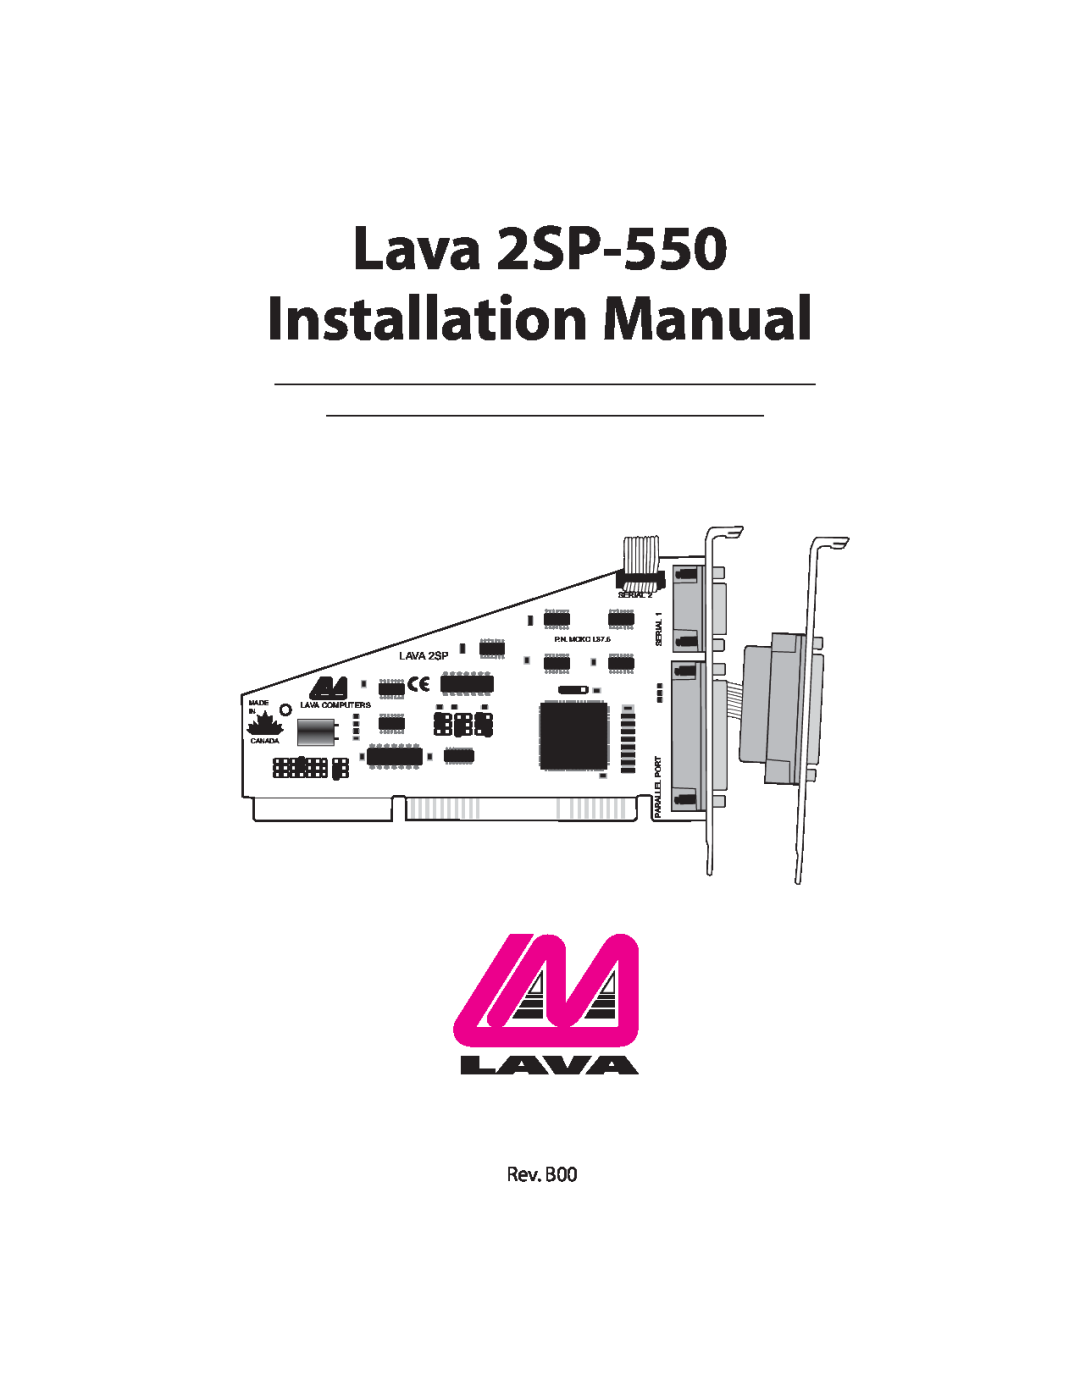 Lava Computer 2SP-550 manual LAVA 2SP-PCIe DB-9, DB-9 Quick Installation Guide, Pb RoHS, Port B, Port A, Lava Computers 